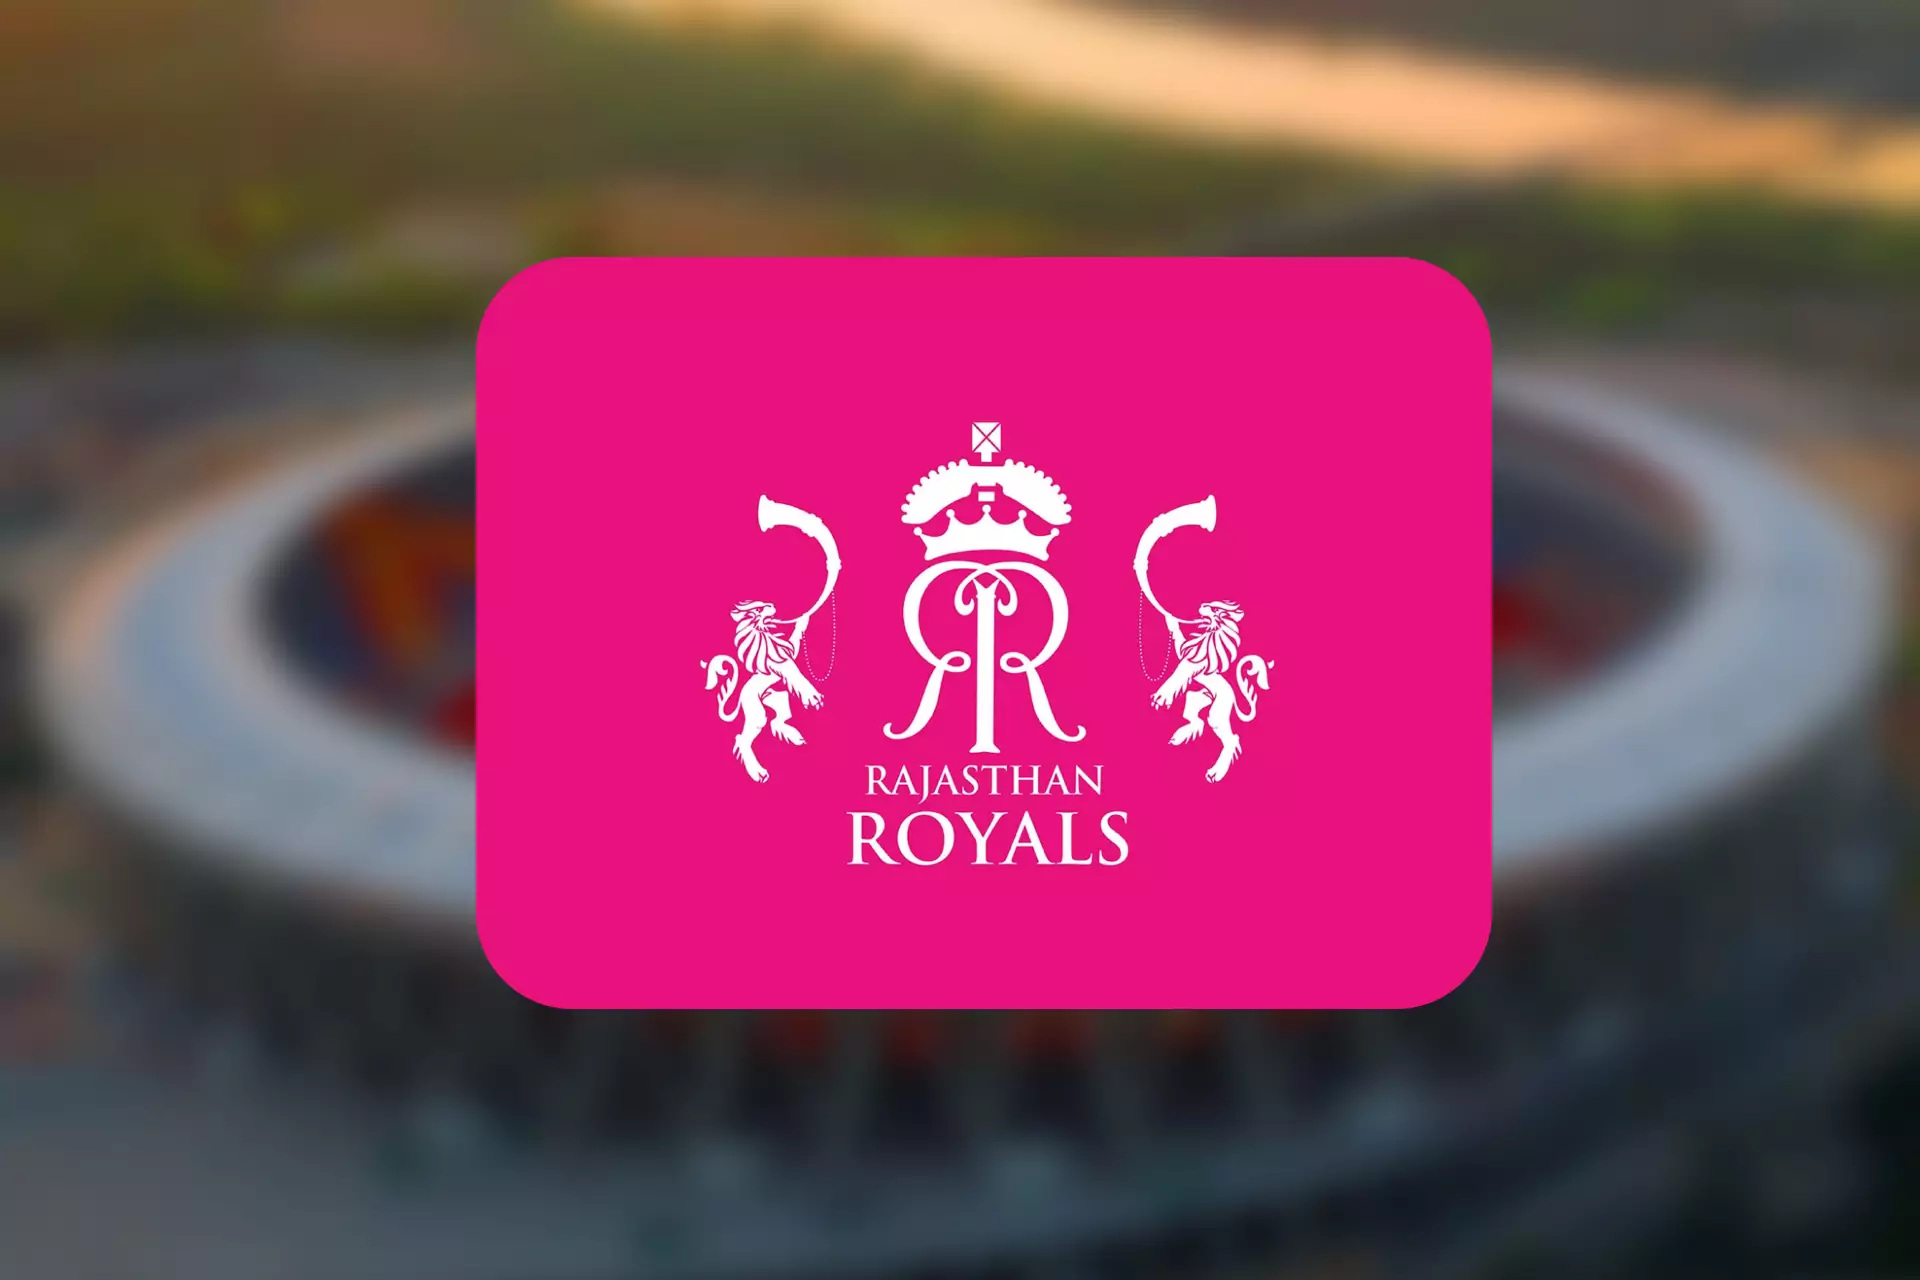 Rajasthan Royals won the IPL in 2008.